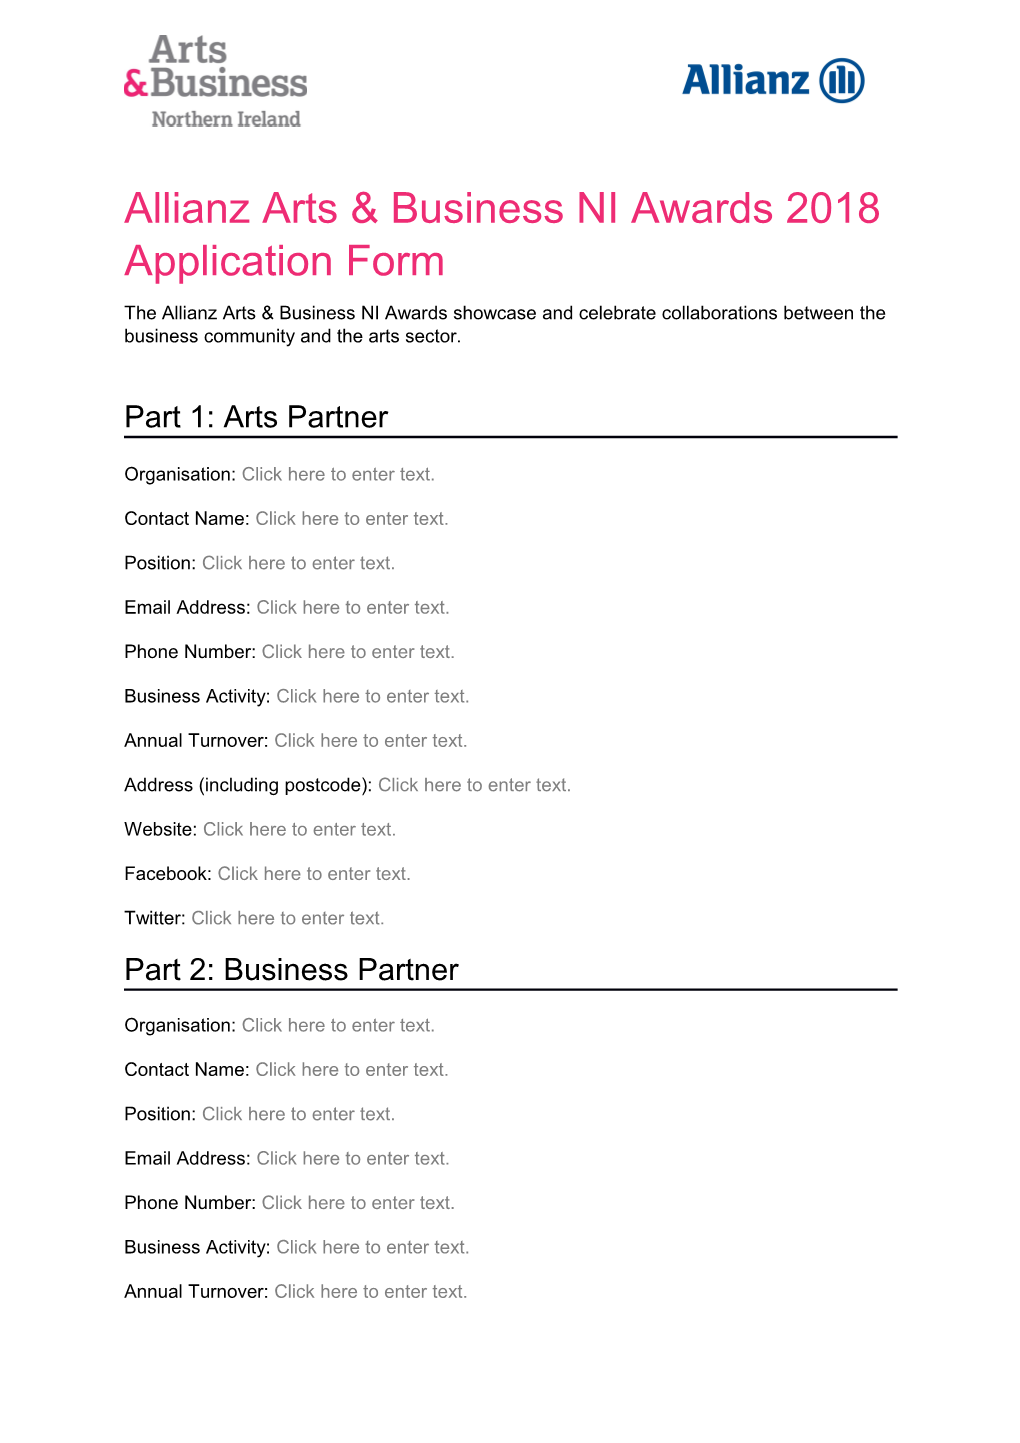 Allianz Arts & Business NI Awards 2018 Application Form